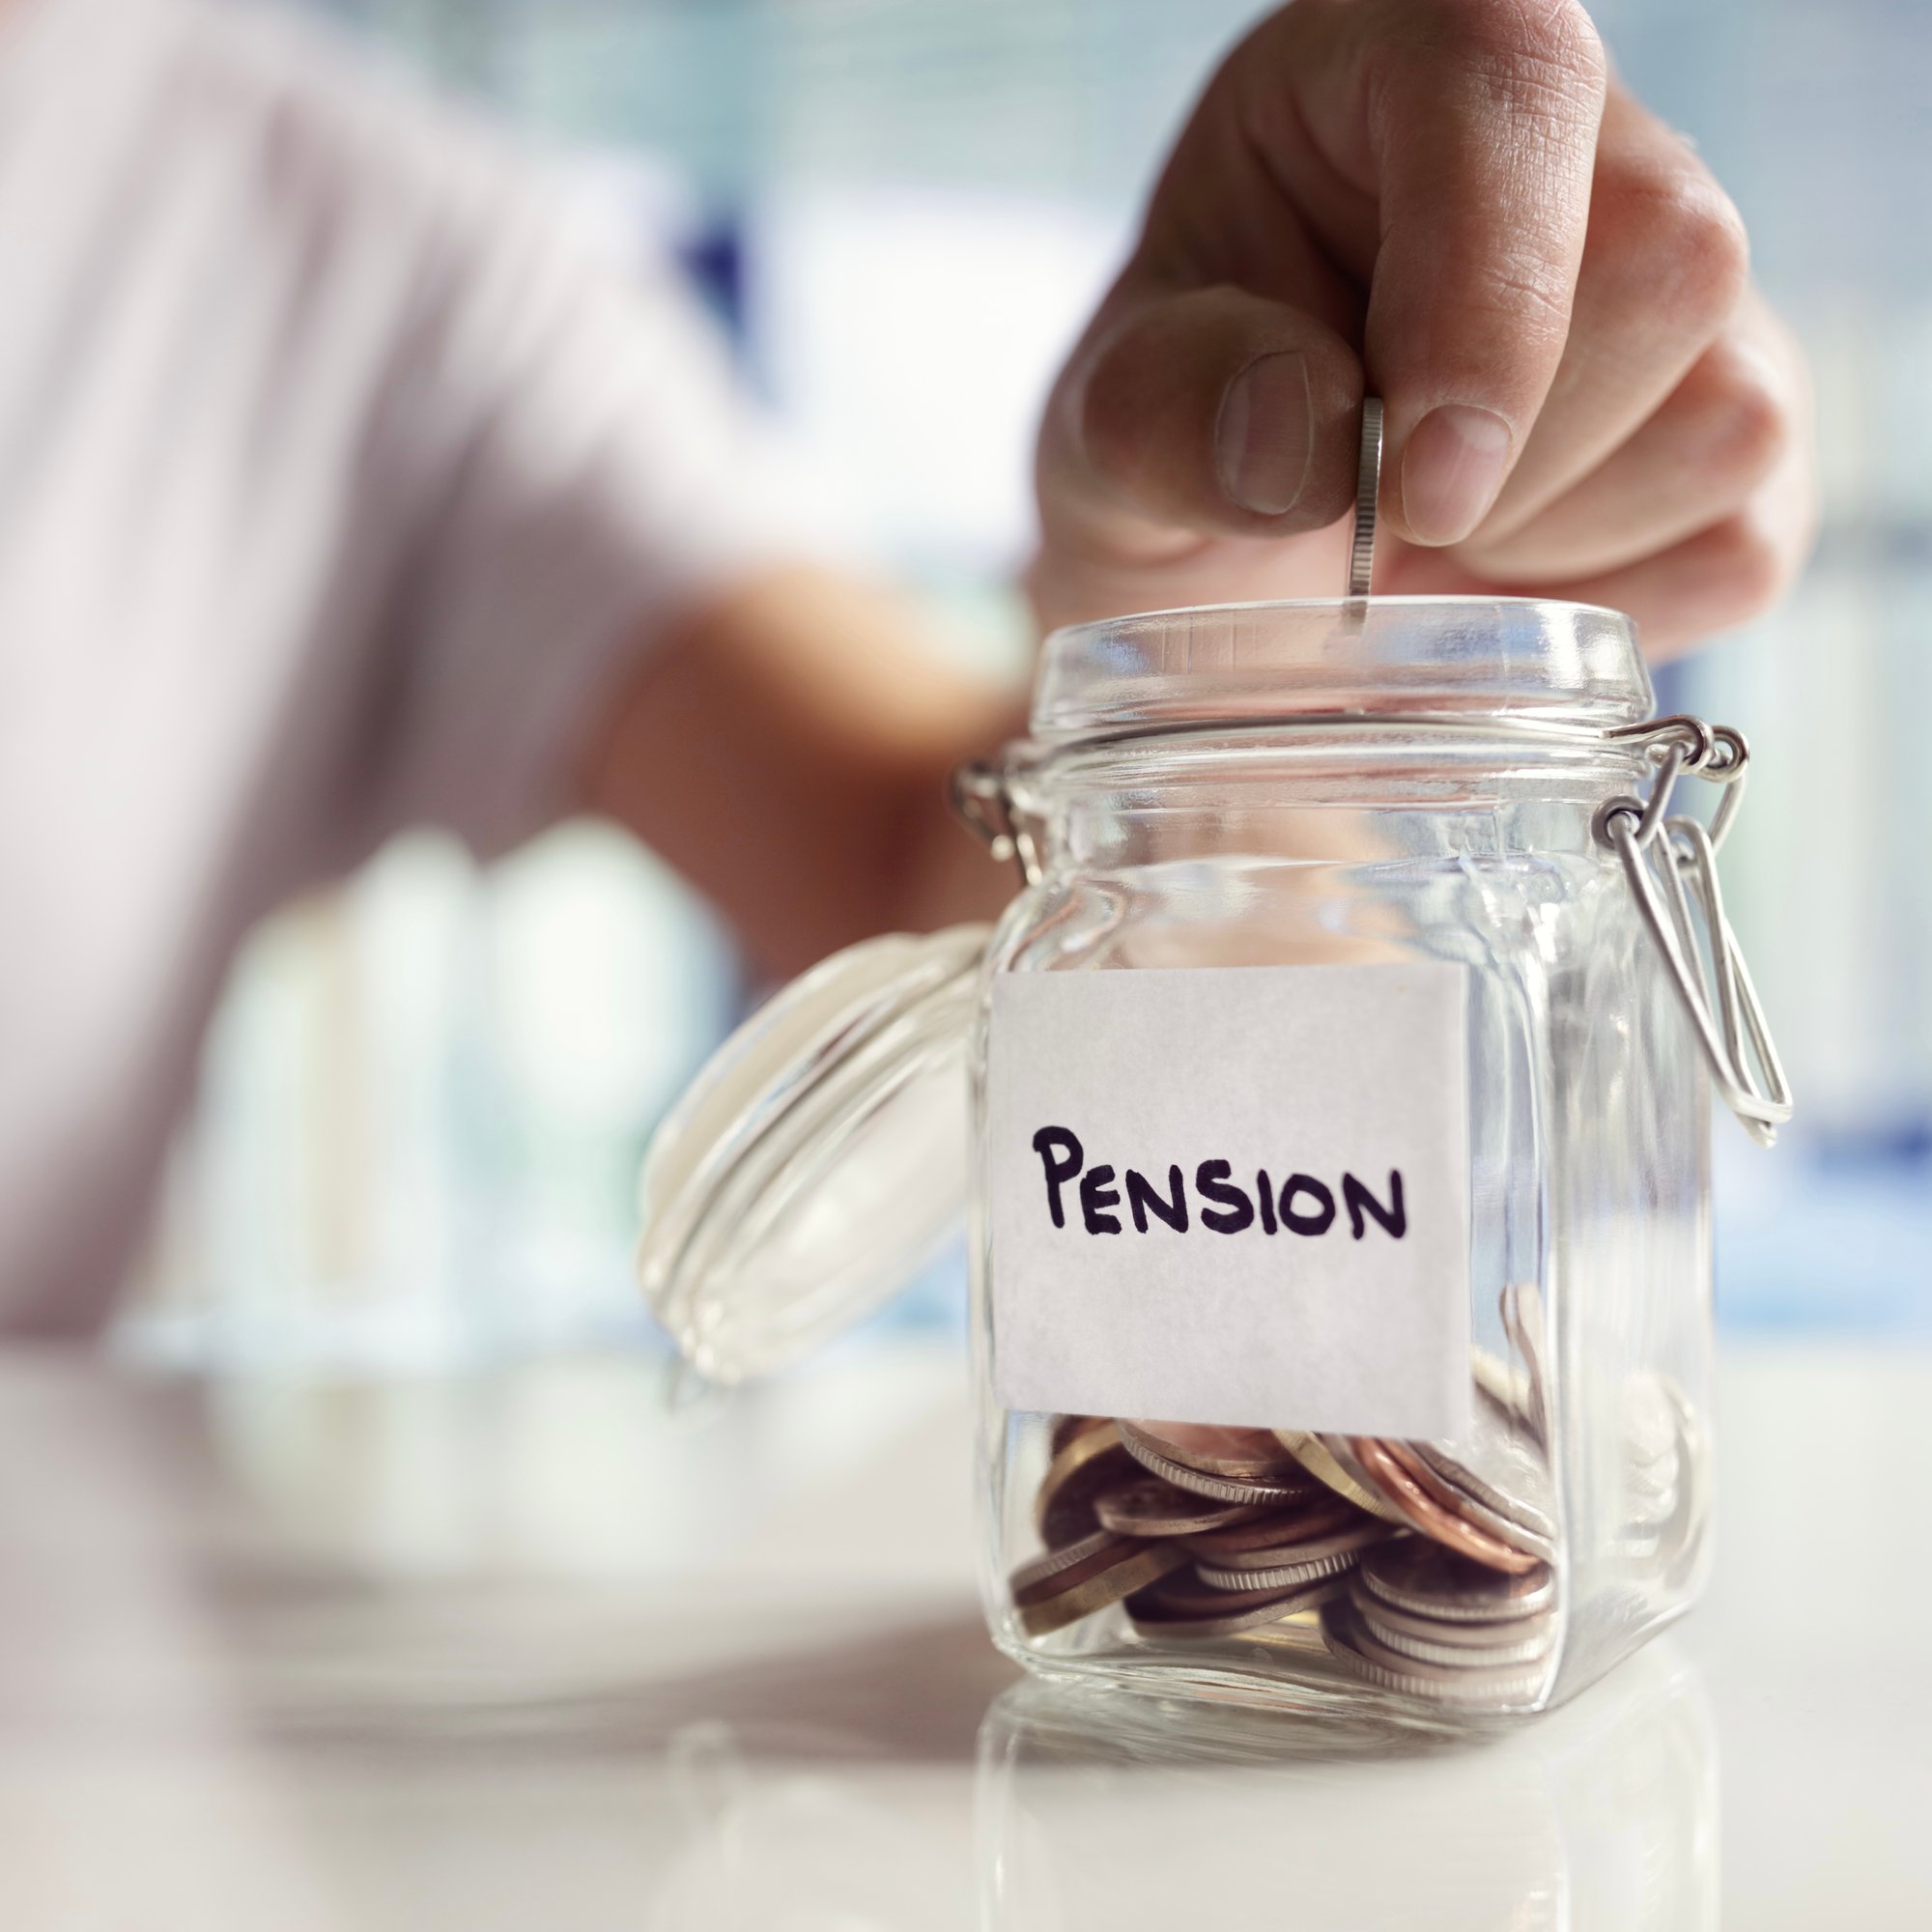 saving-and-pension-planning-2021-08-26-22-29-57-utc-1